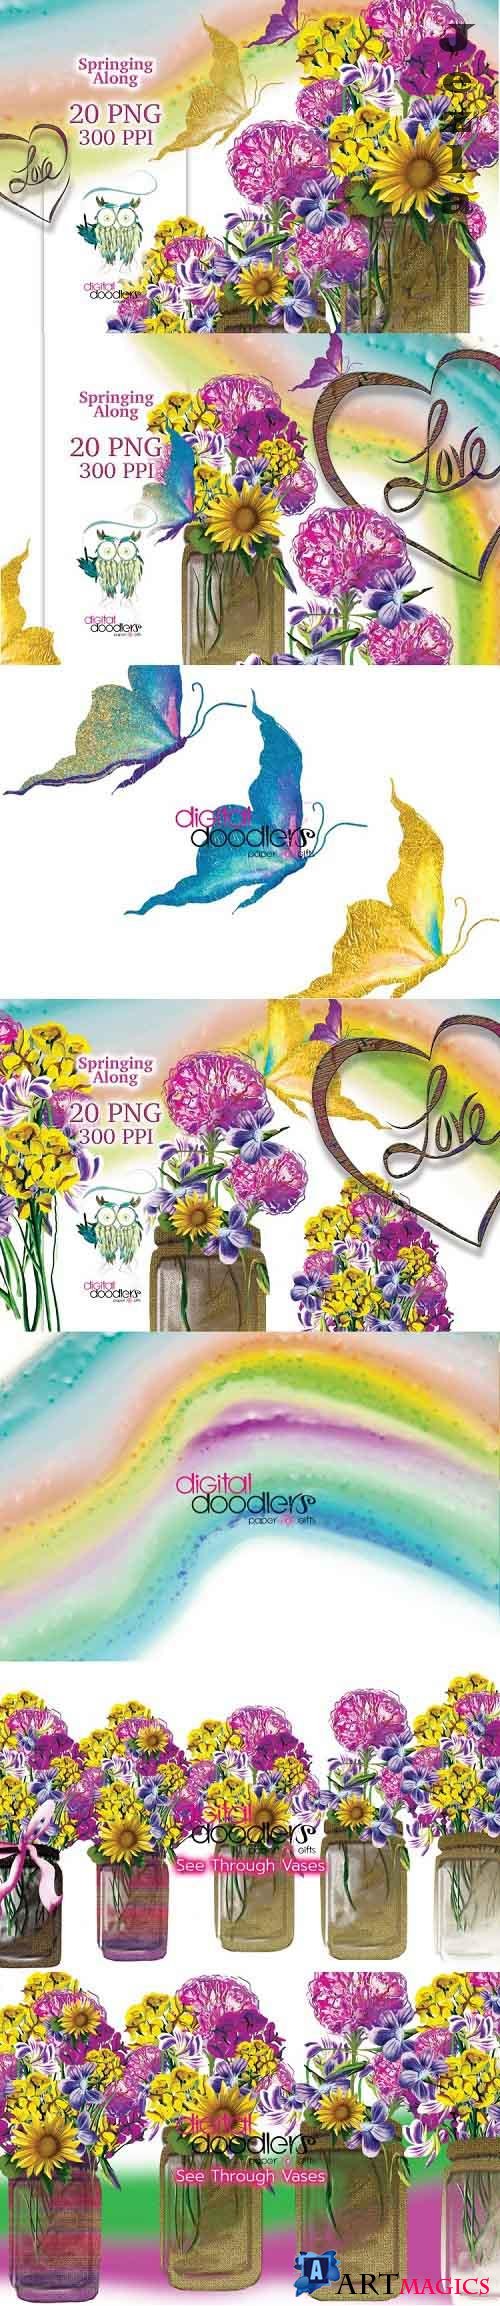 Springing Along Floral Graphics - 1136990